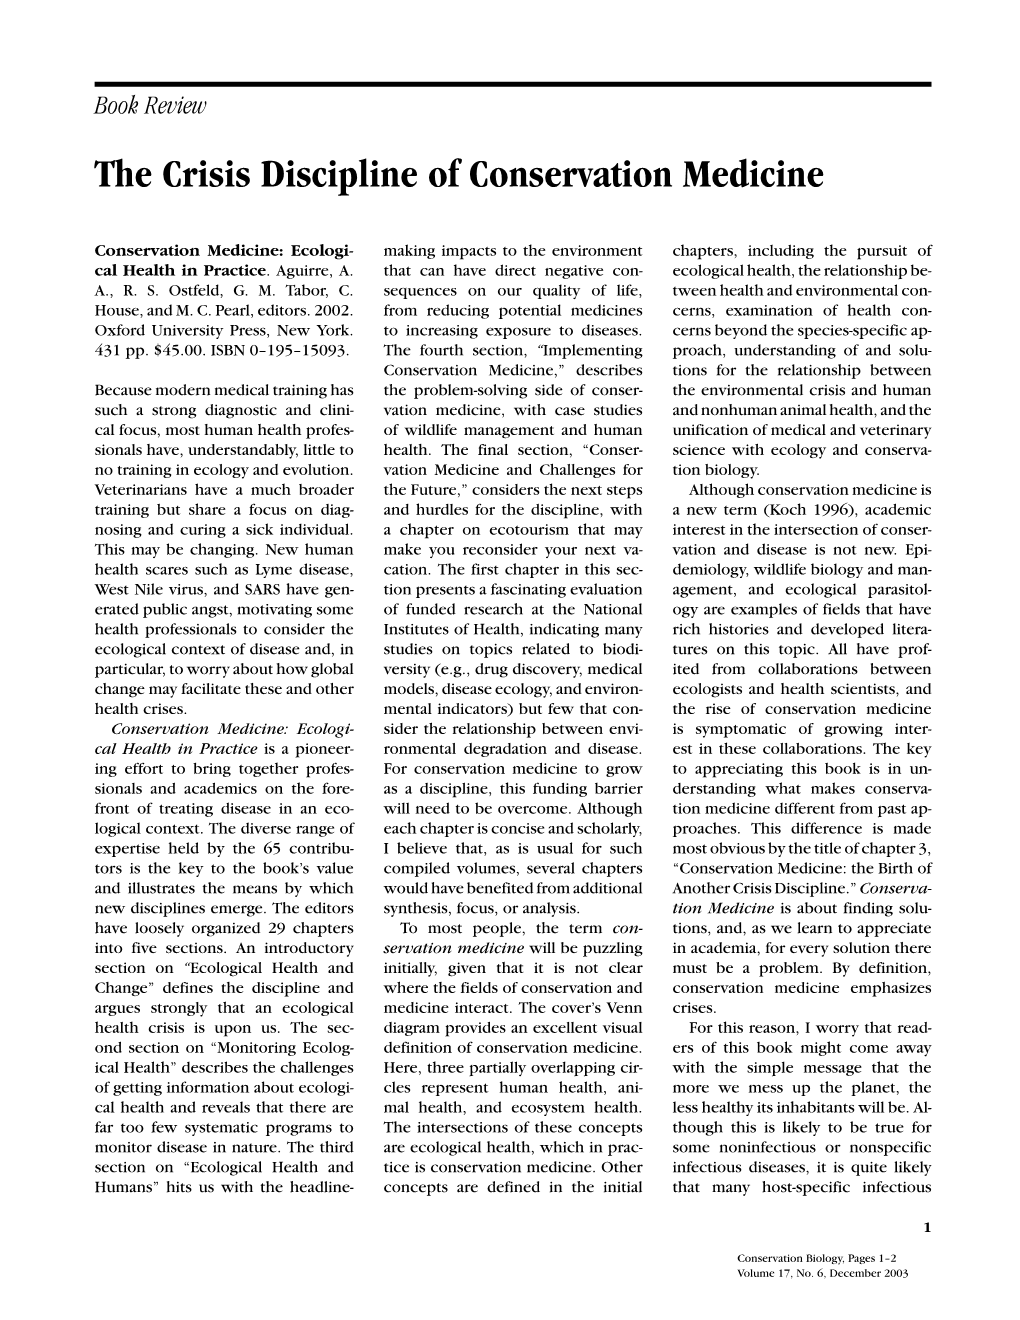 The Crisis Discipline of Conservation Medicine